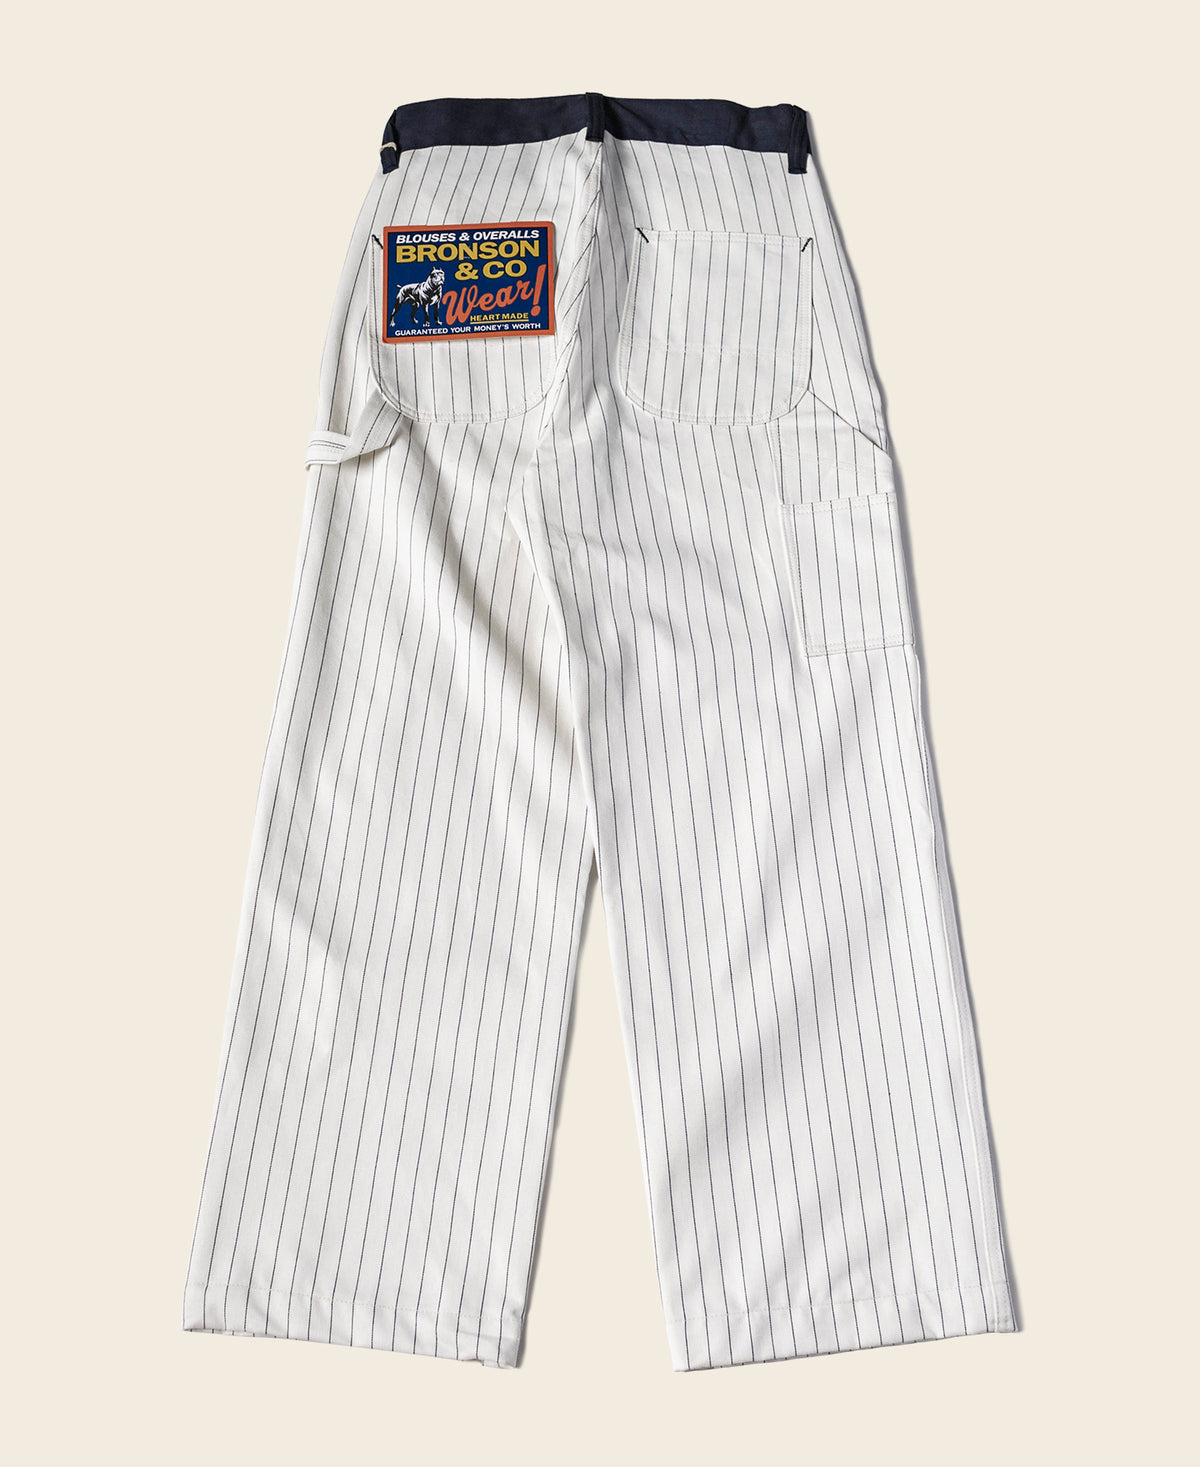 Lot 952 HBT Striped Mechanic Pants - White